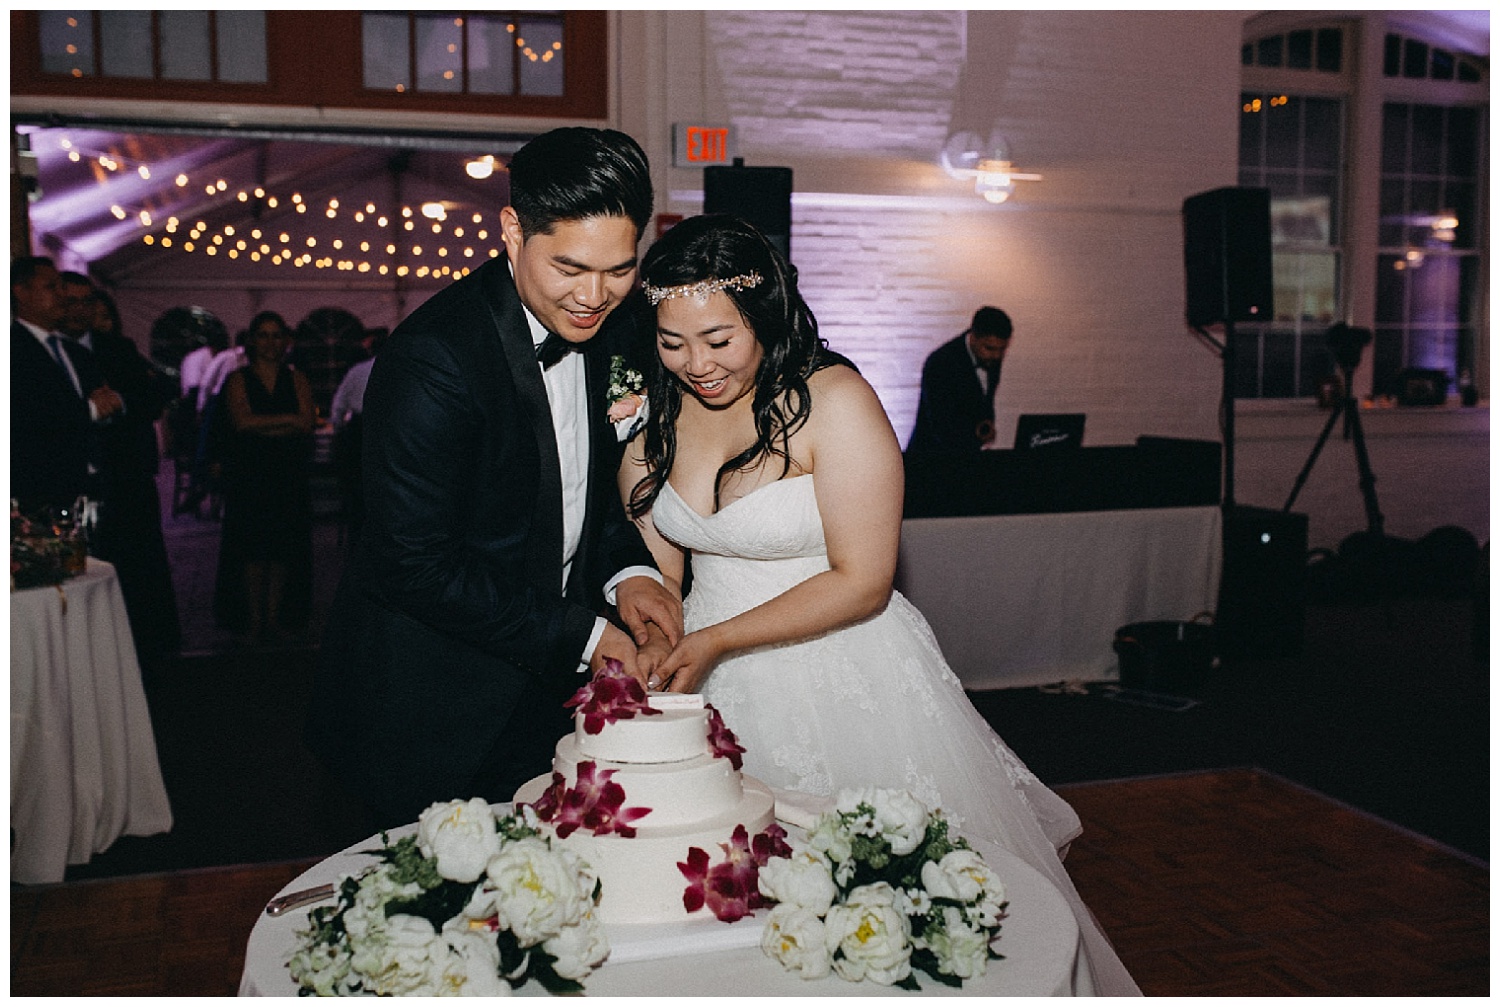 bride and groom cut cake at massachusetts wedding